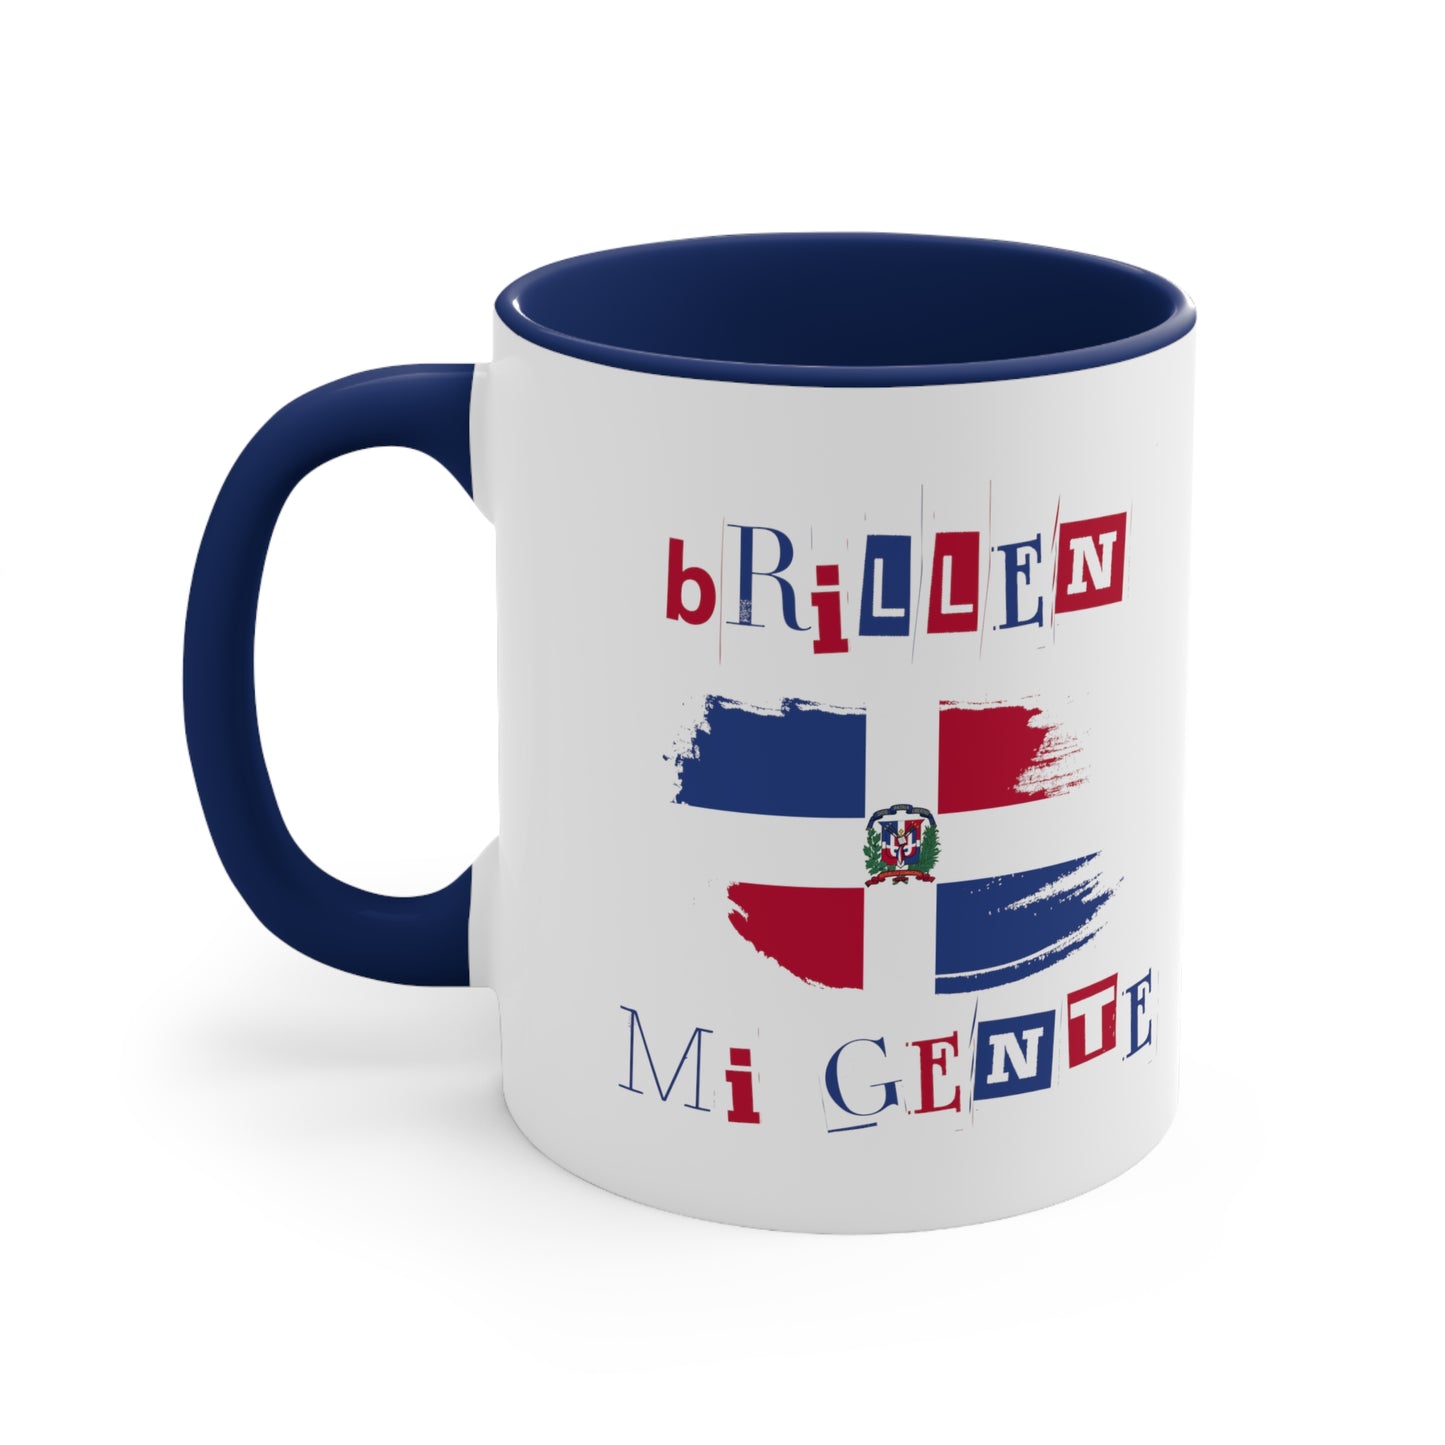 Brillen Mi Gente Dominican Republic I, Coffee Mug, 11oz